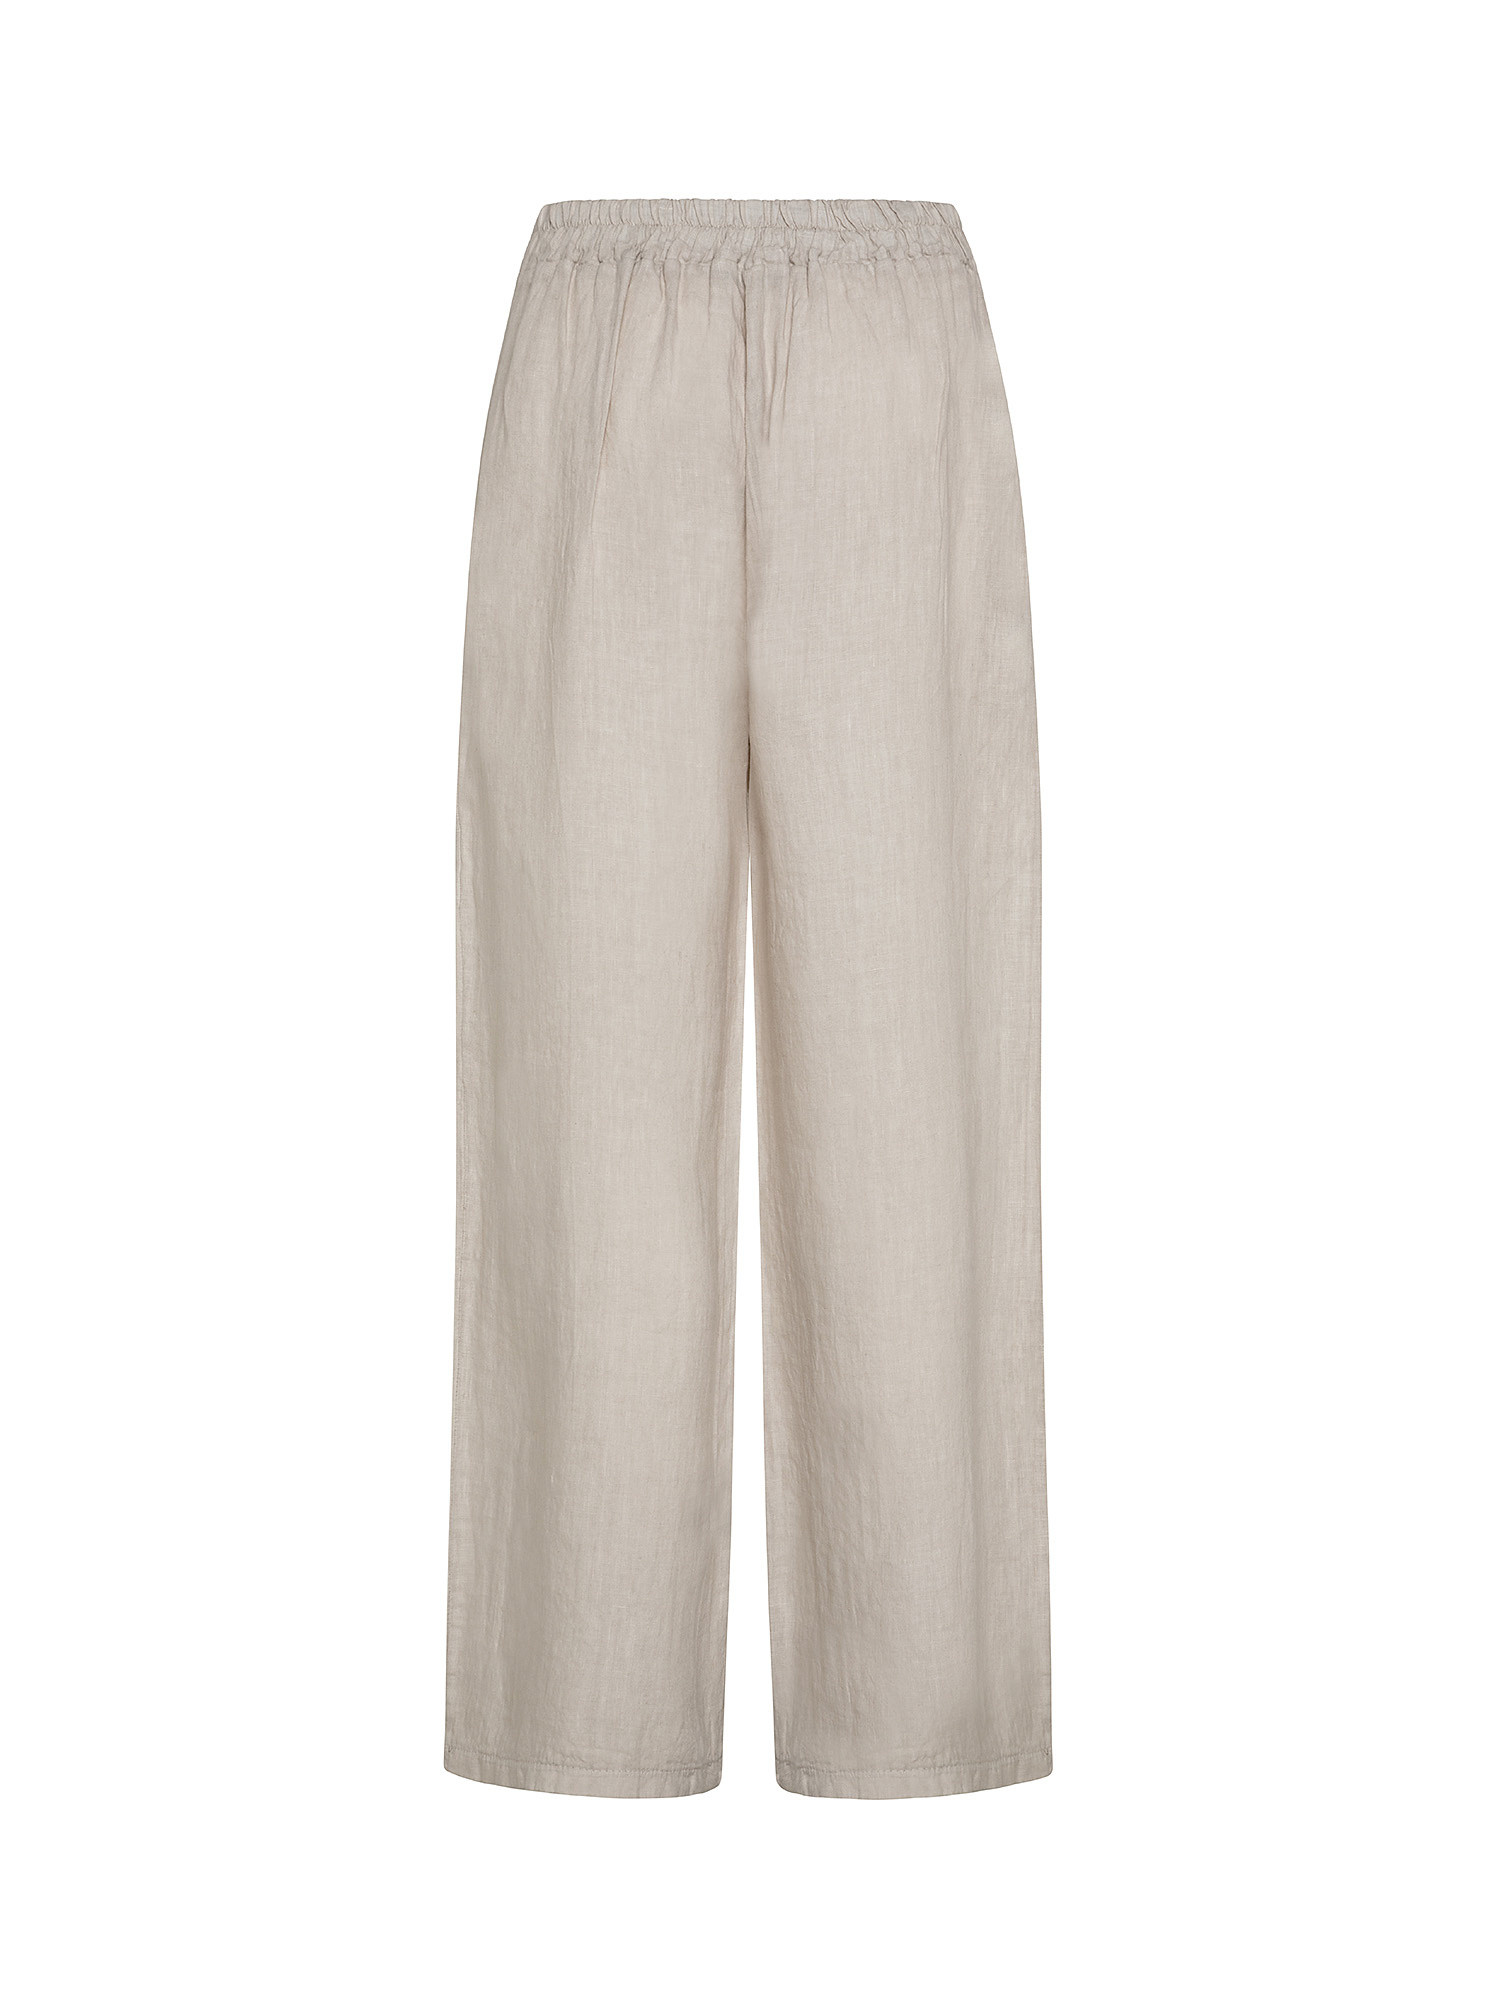 Pantalone ampio puro lino, Beige, large image number 1